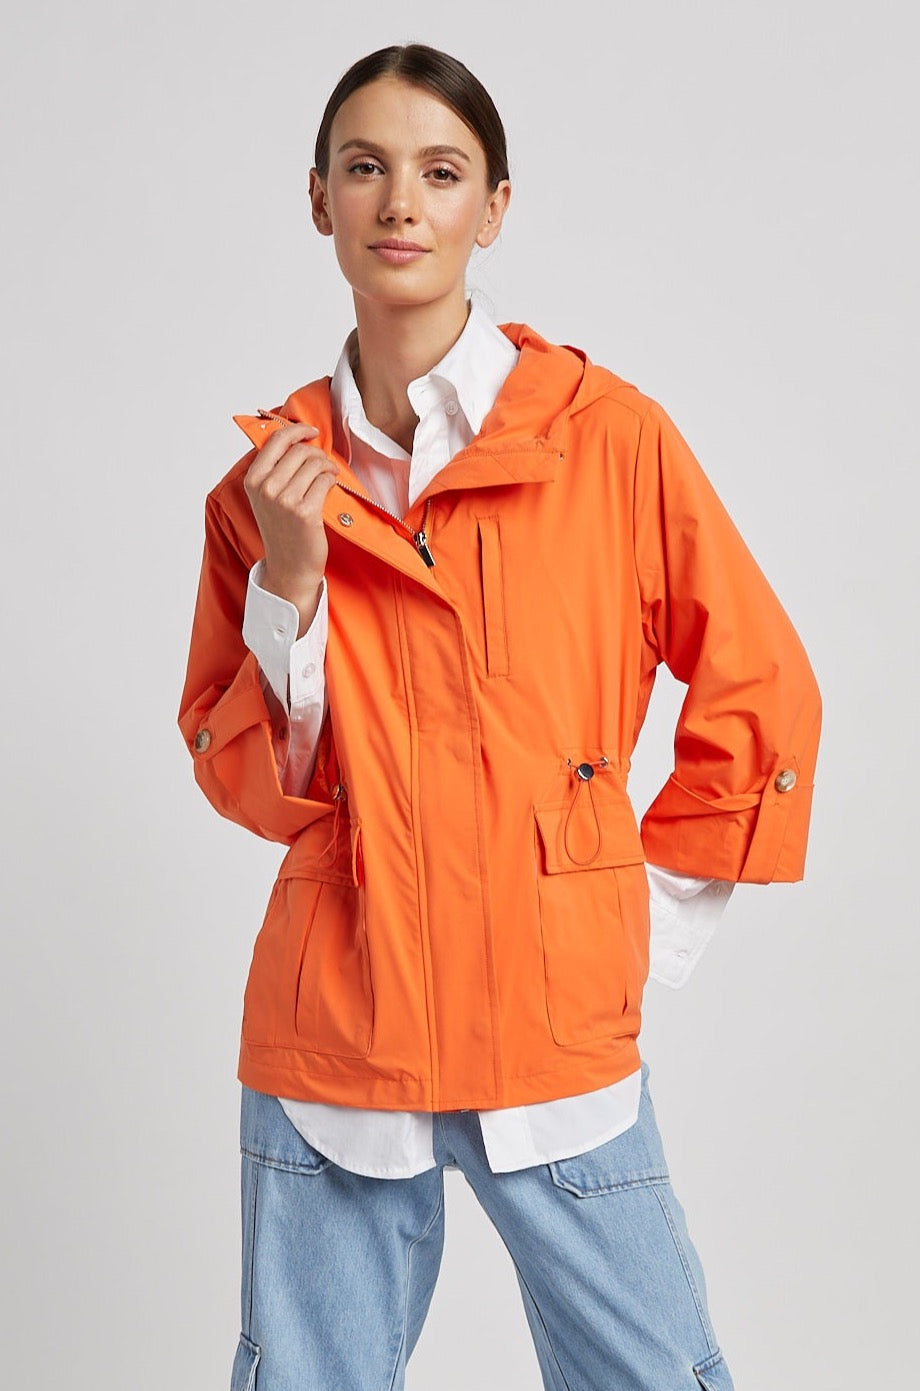 Adroit Atelier Roseline Hooded Anorak Jacket in Tangerine